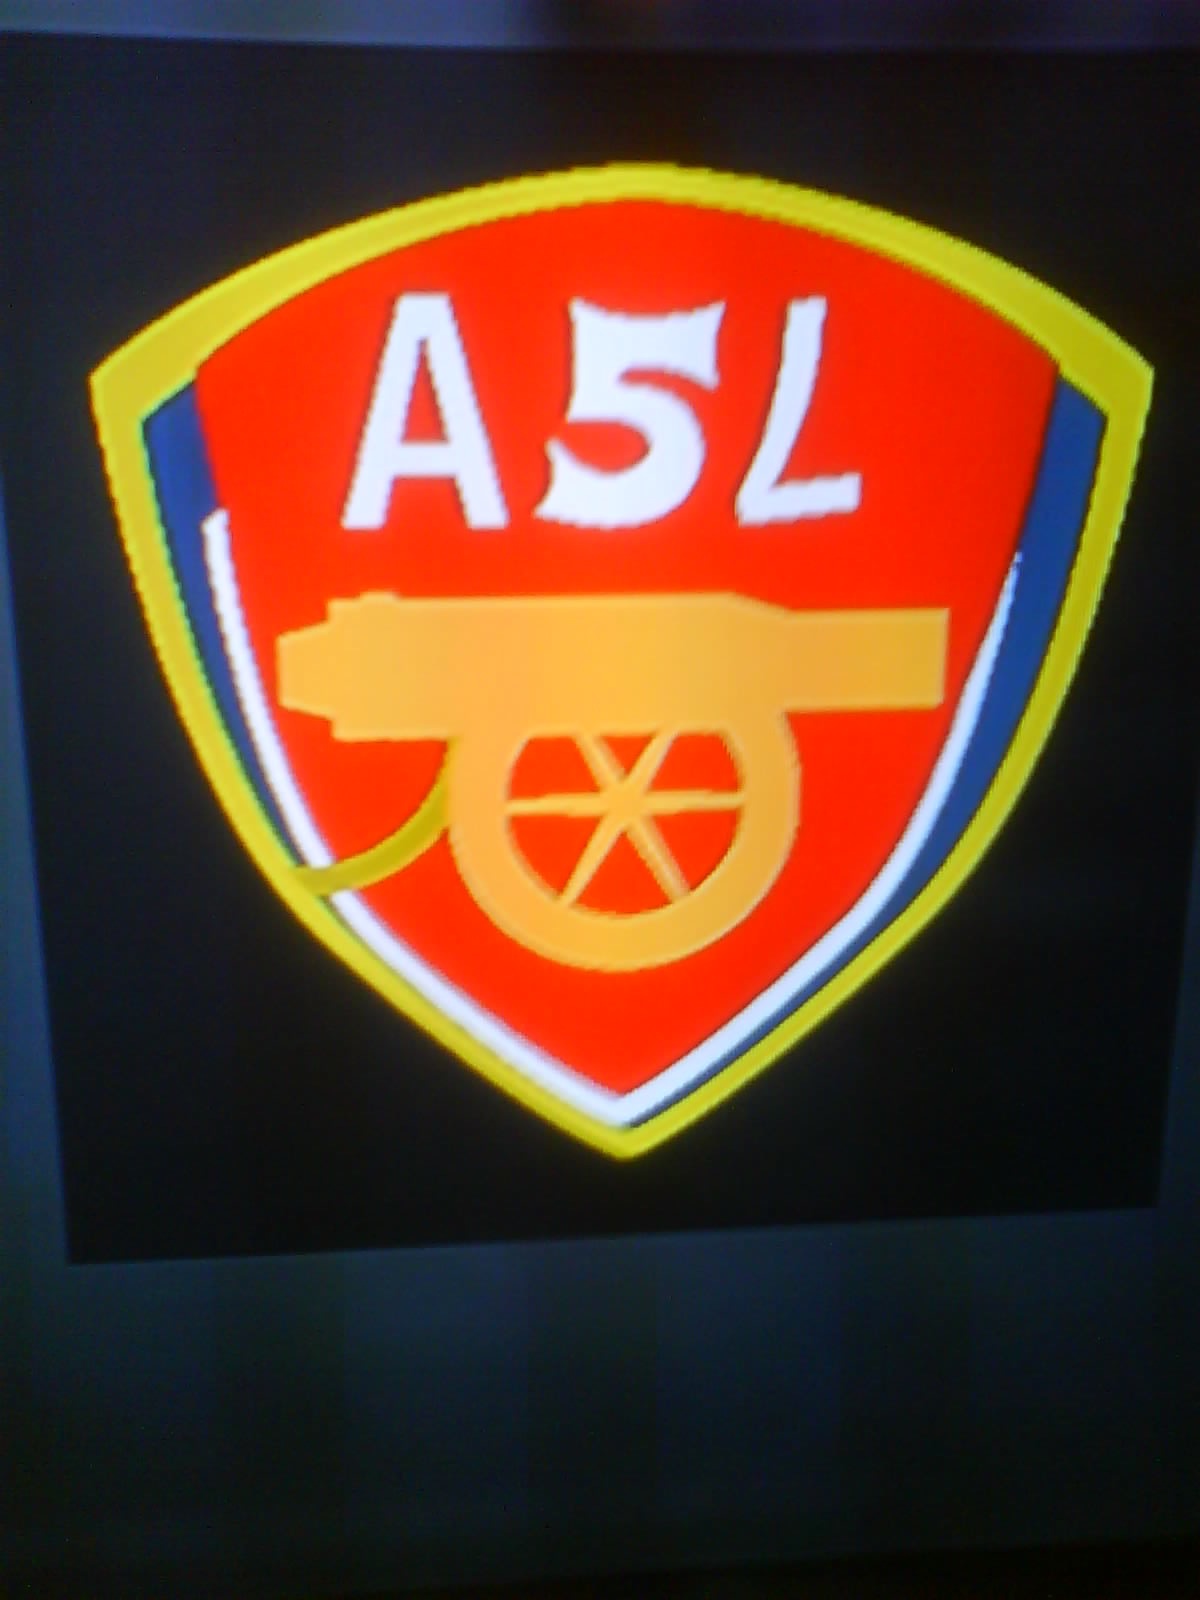 Emblems Black Ops: Arsenal football team shield